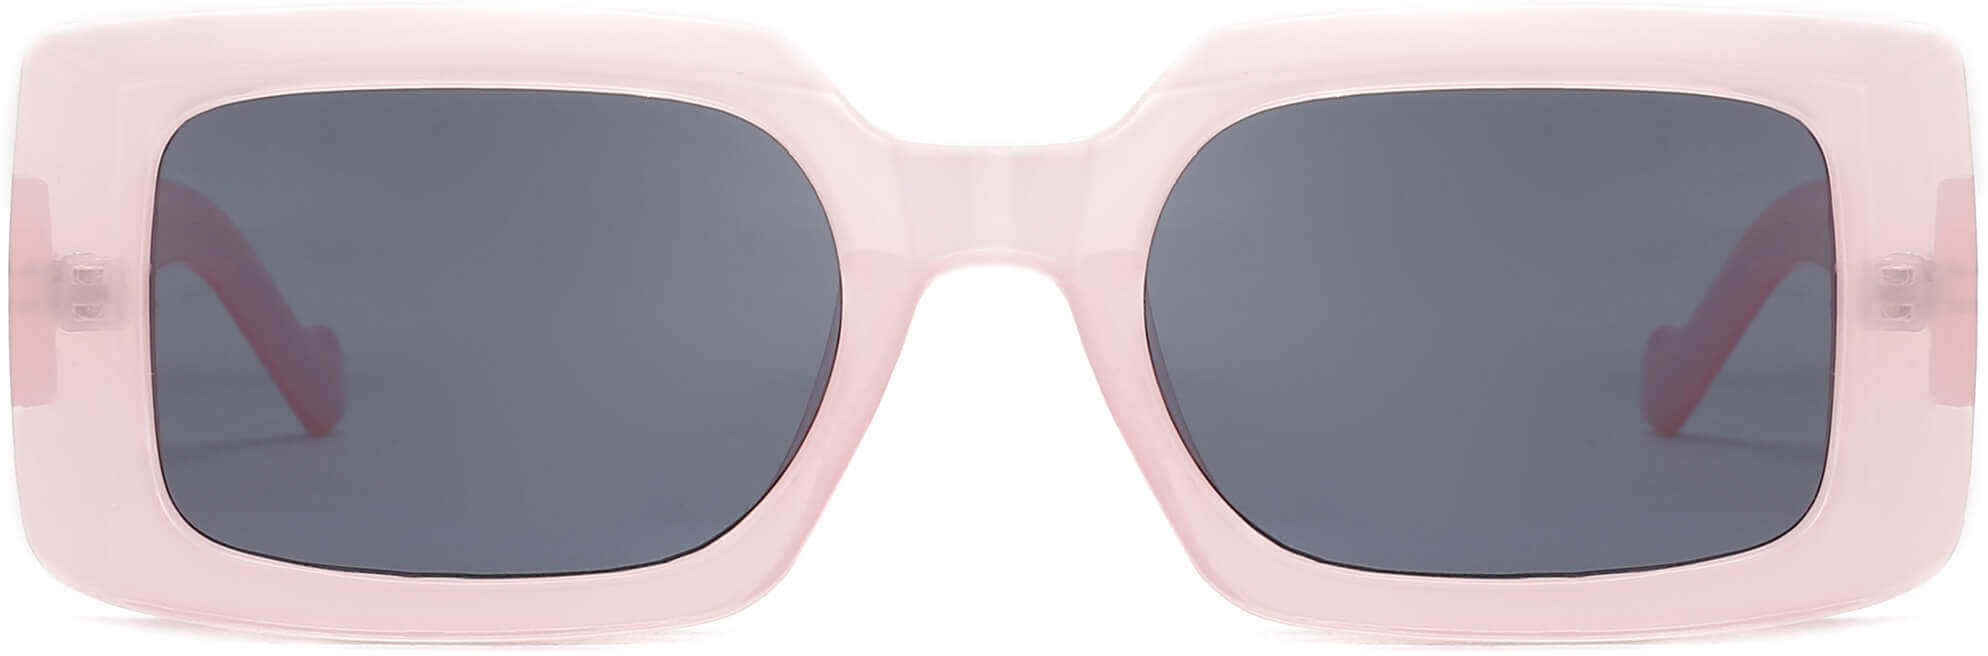 Caleb Pink Plastic Sunglasses from ANRRI